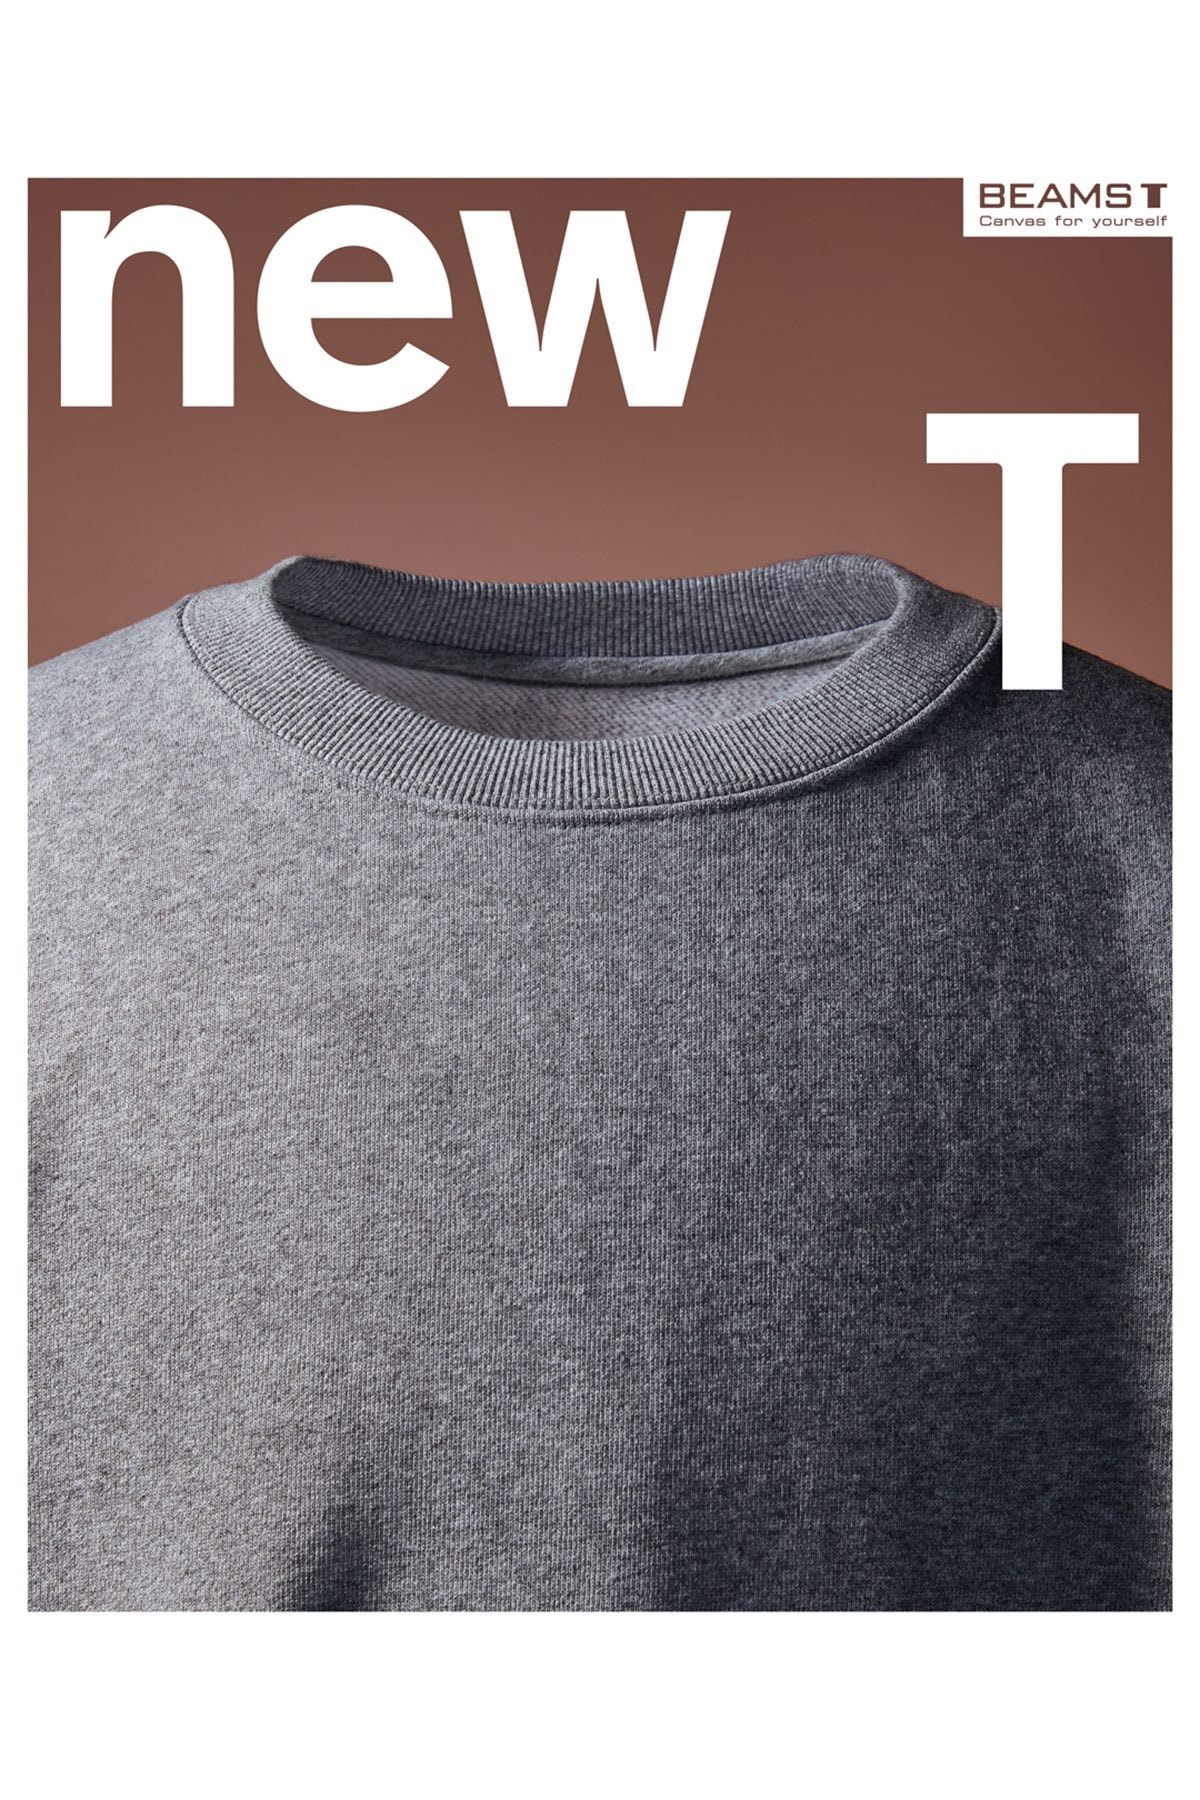 BEAMS T 推出全新素面服飾單品